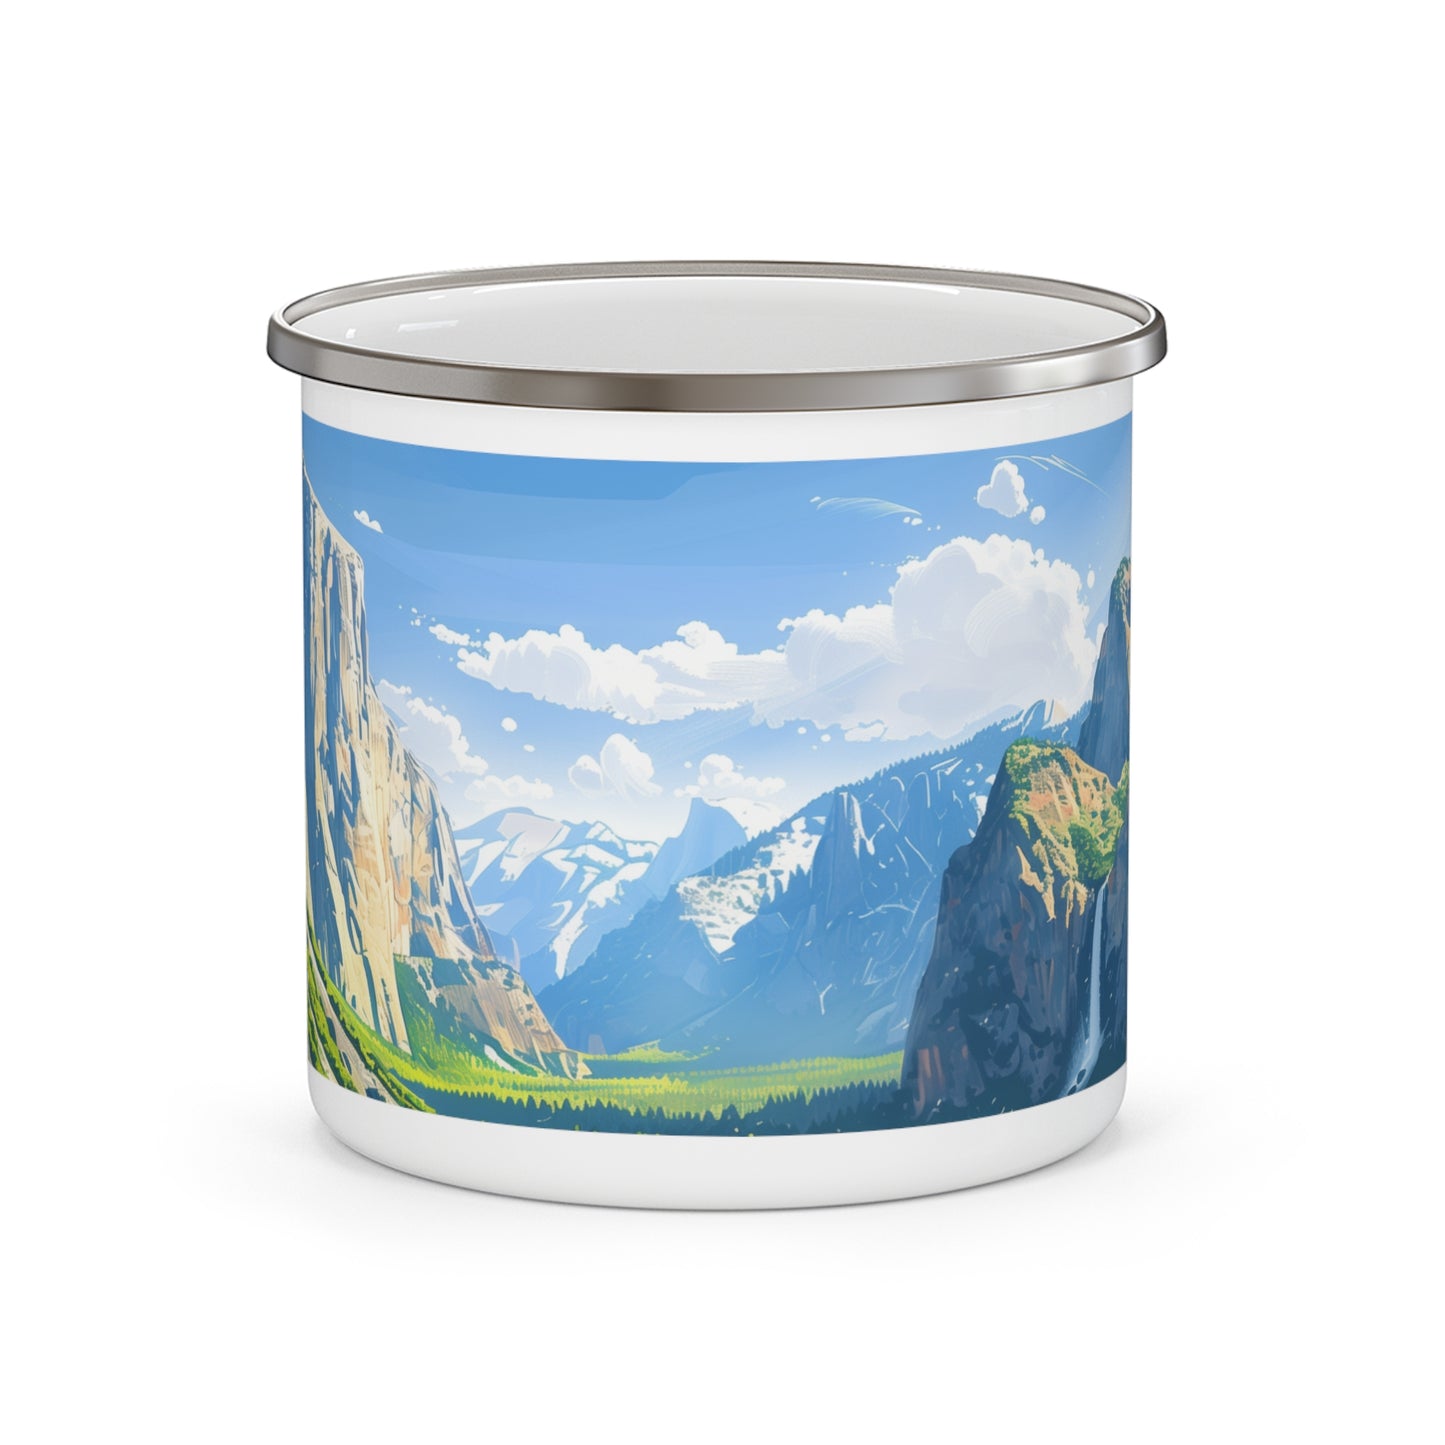 Camping Mug with Yosemite National Park Design, 12oz Coffee Cup